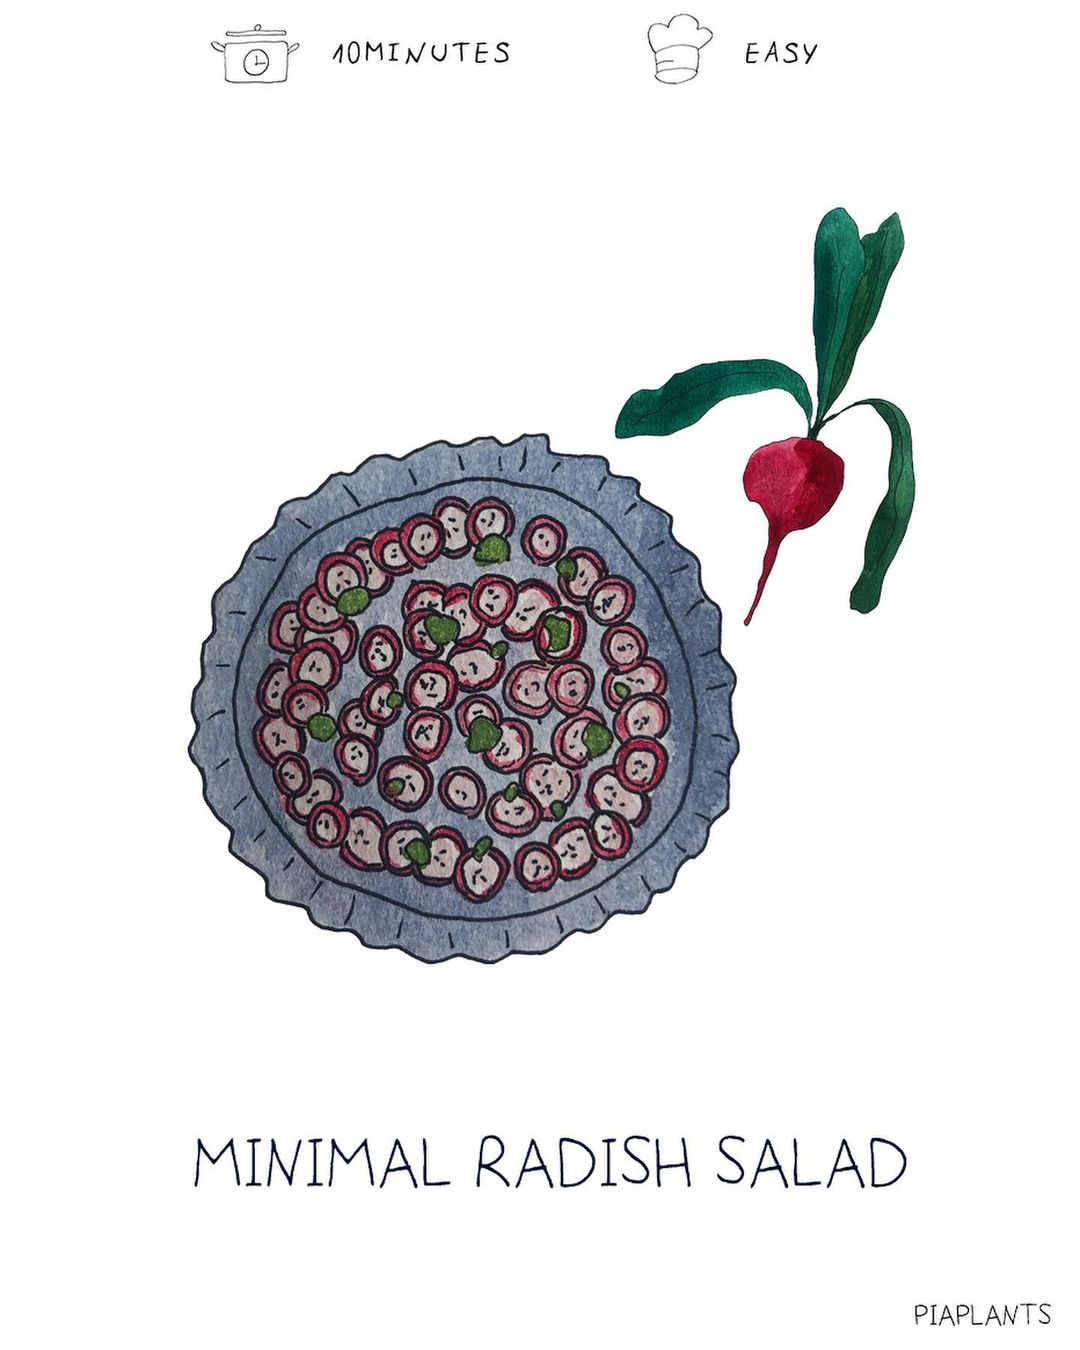 Minimal radish salad